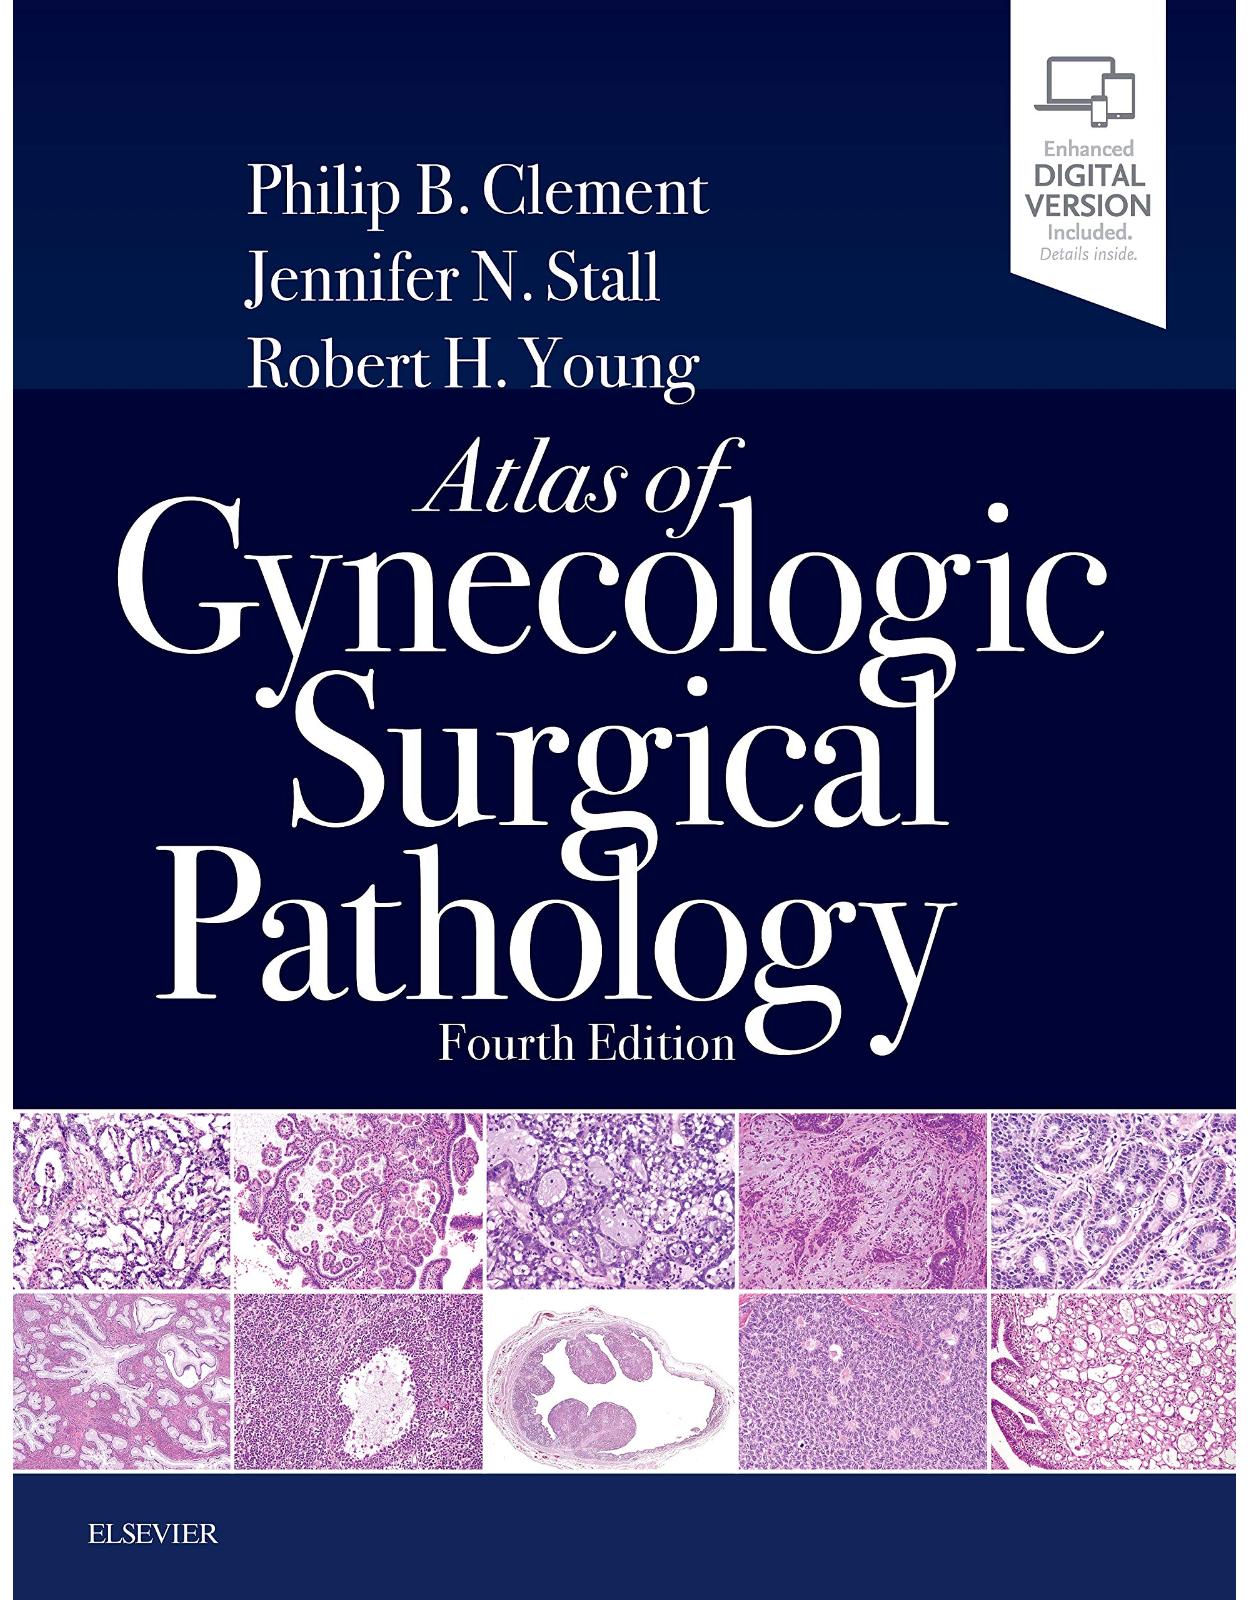 Atlas of Gynecologic Surgical Pathology, 4th Edition